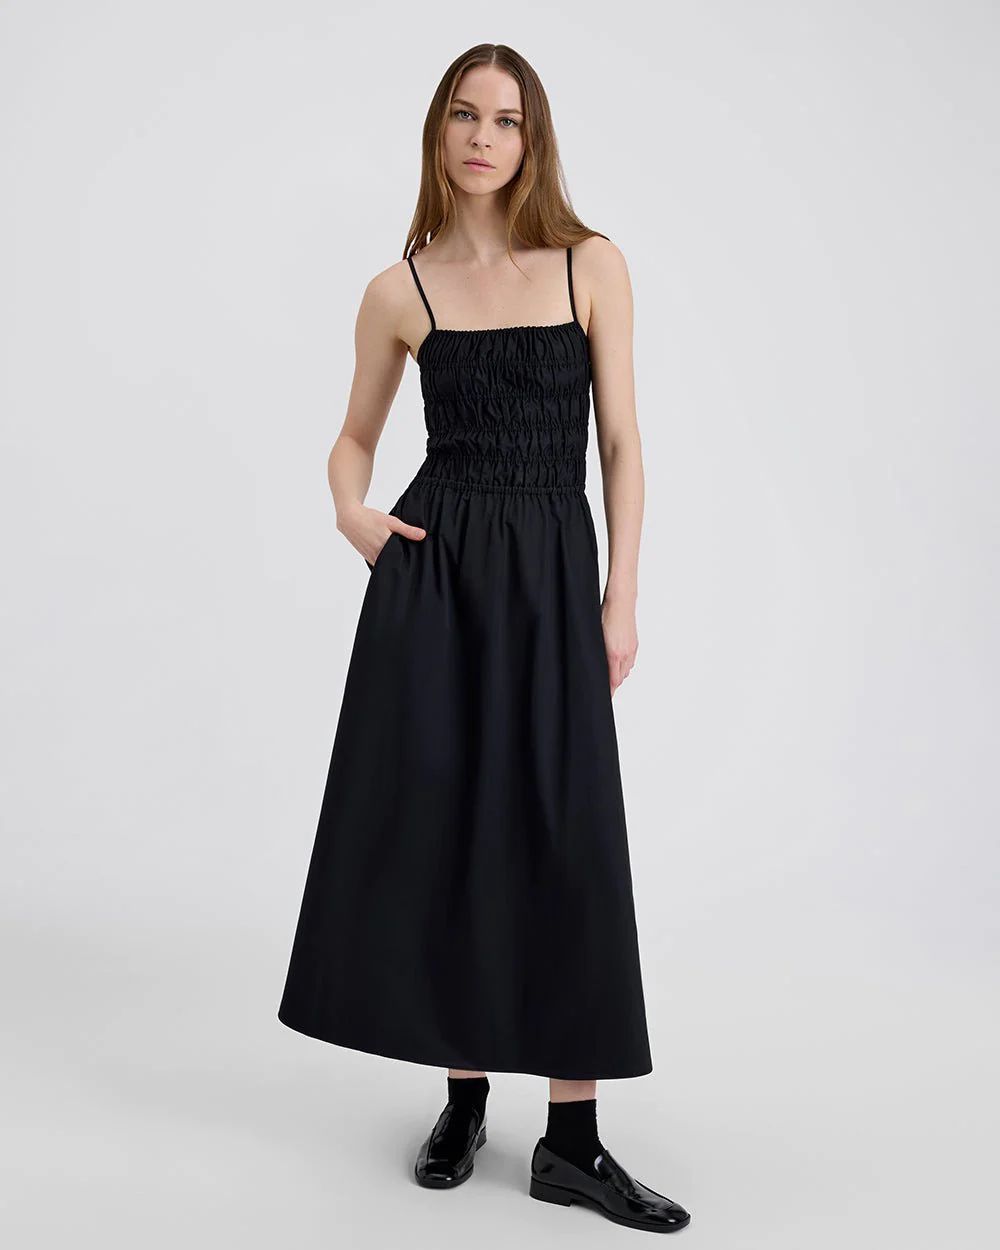 The Delta Midi Dress in Blackout | Solid & Striped